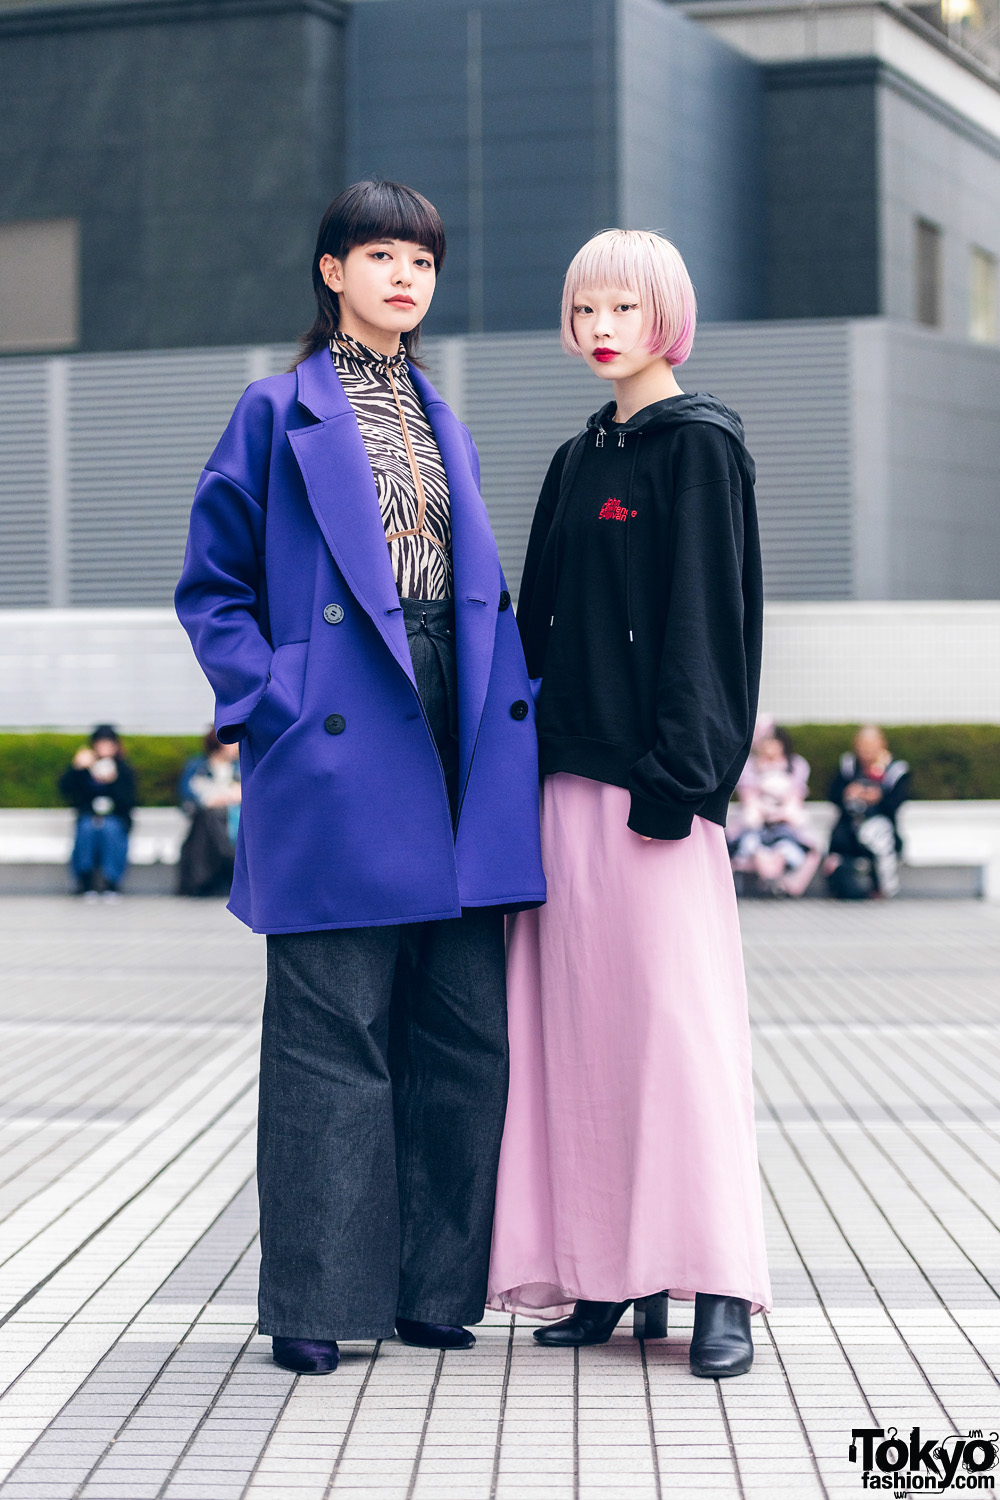 Minimalist Tokyo Street Styles w/ Ombre Hair, Gemini Tale Harness, Vivienne Westwood Coat, John Lawrence Sullivan & Vintage Fashion